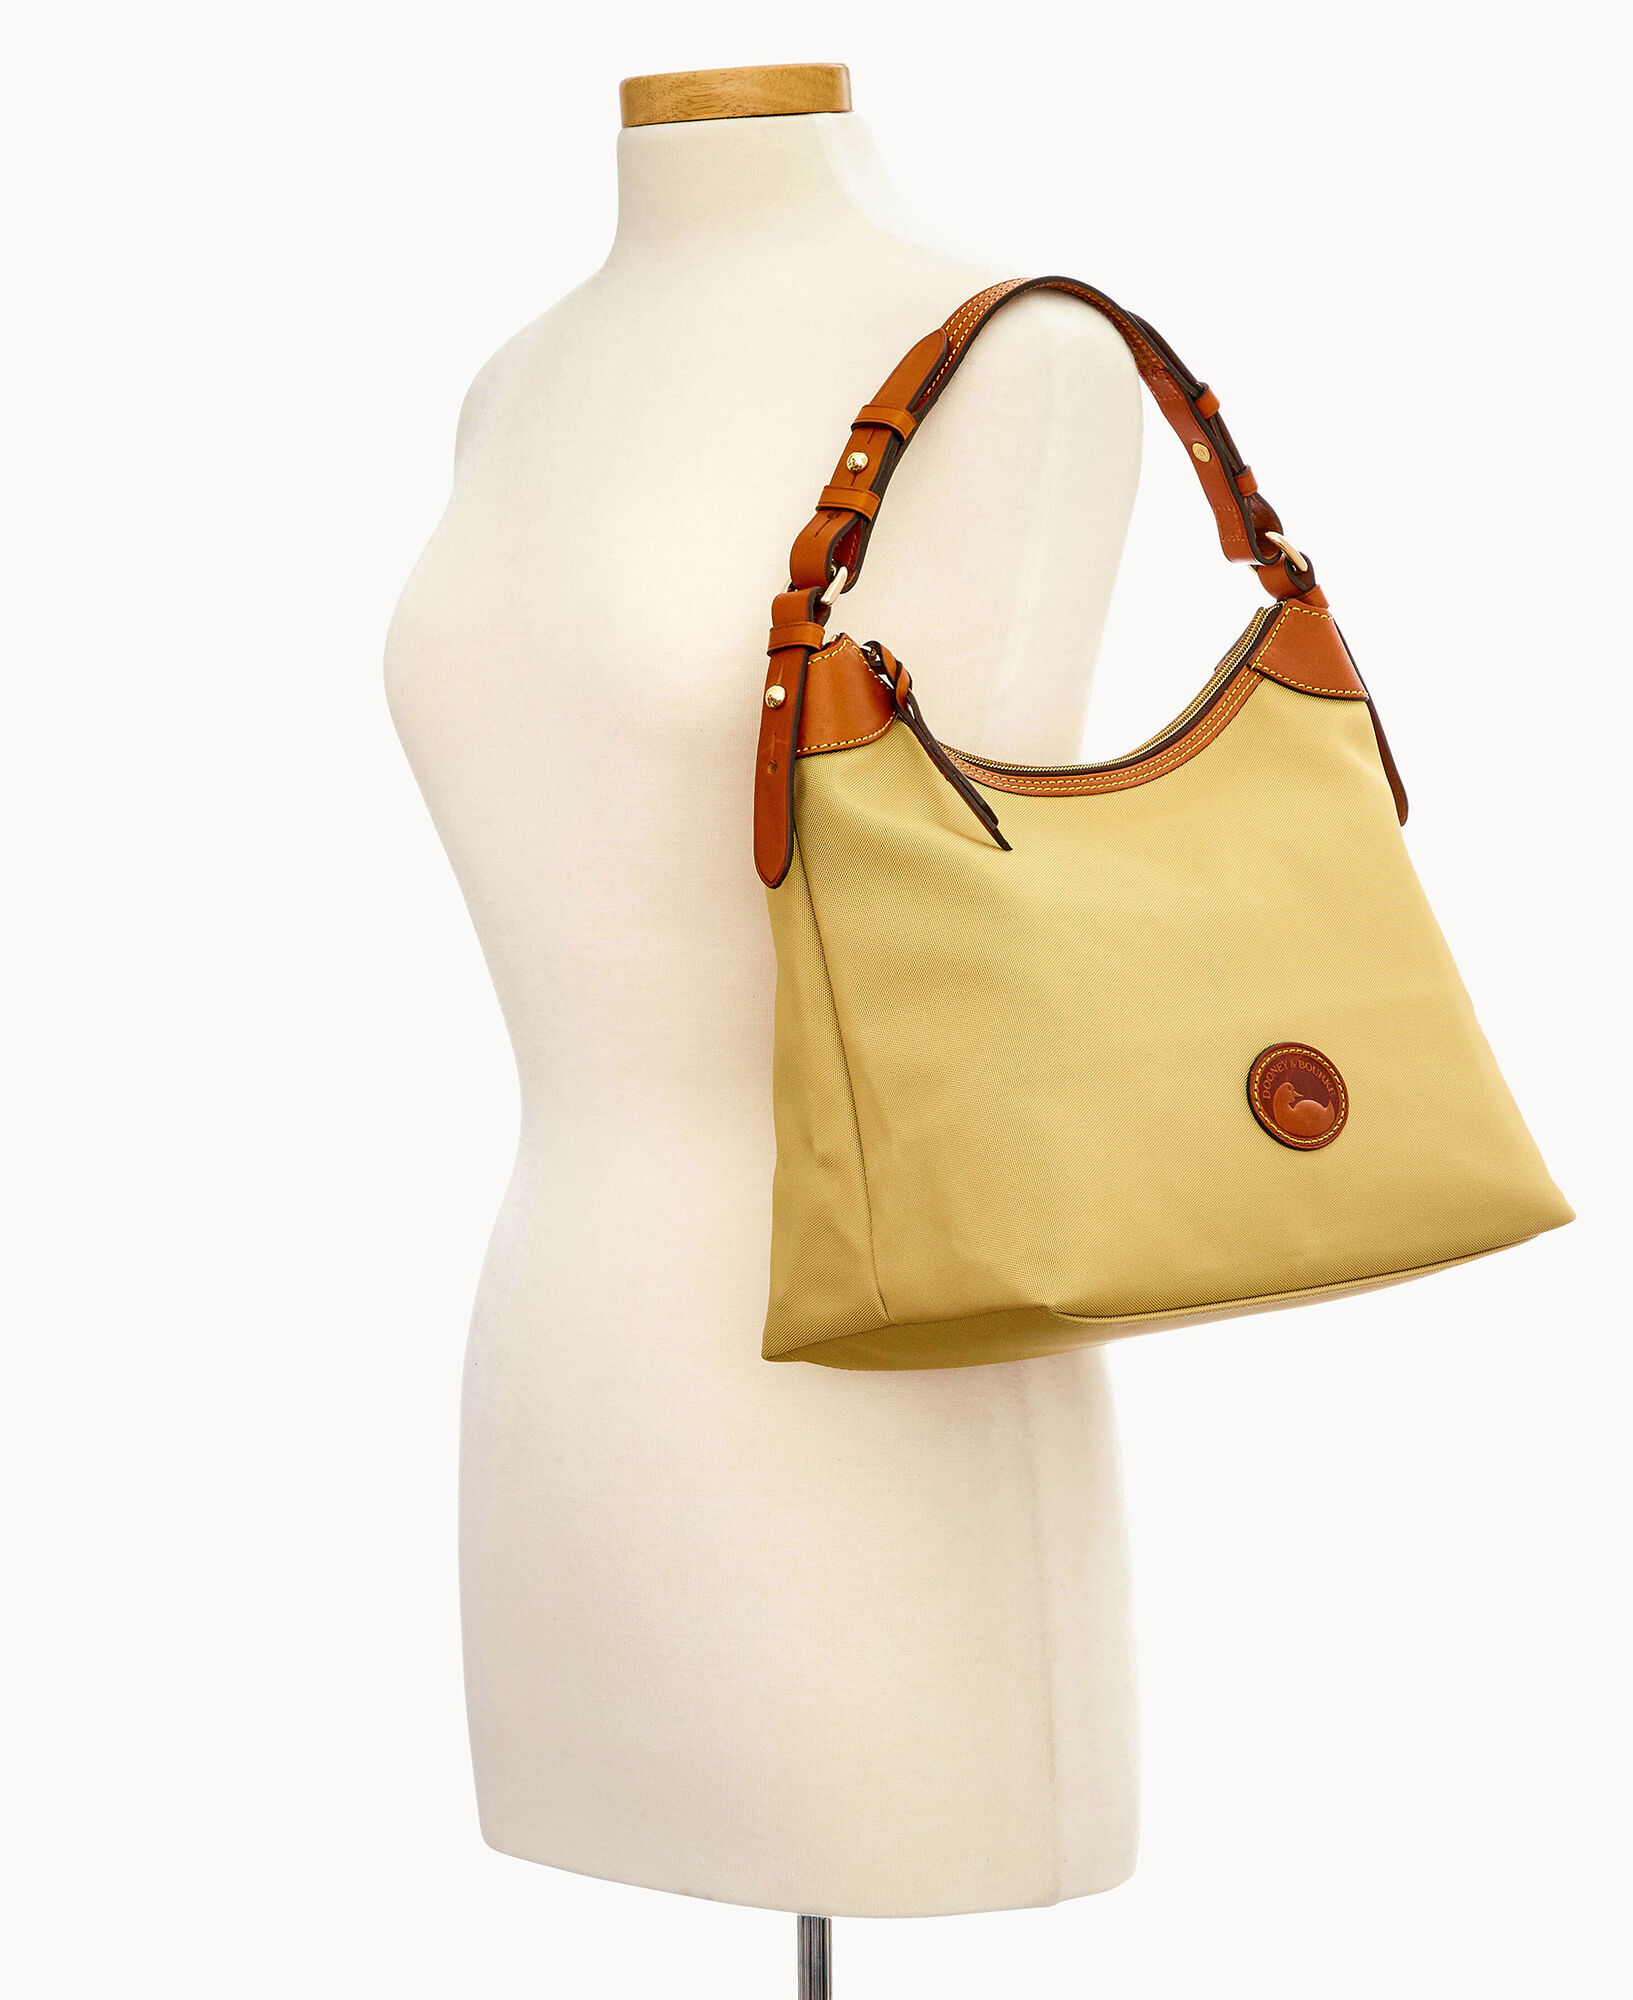 Dooney & Bourke Yellow Nylon Hobo Handbag Purse